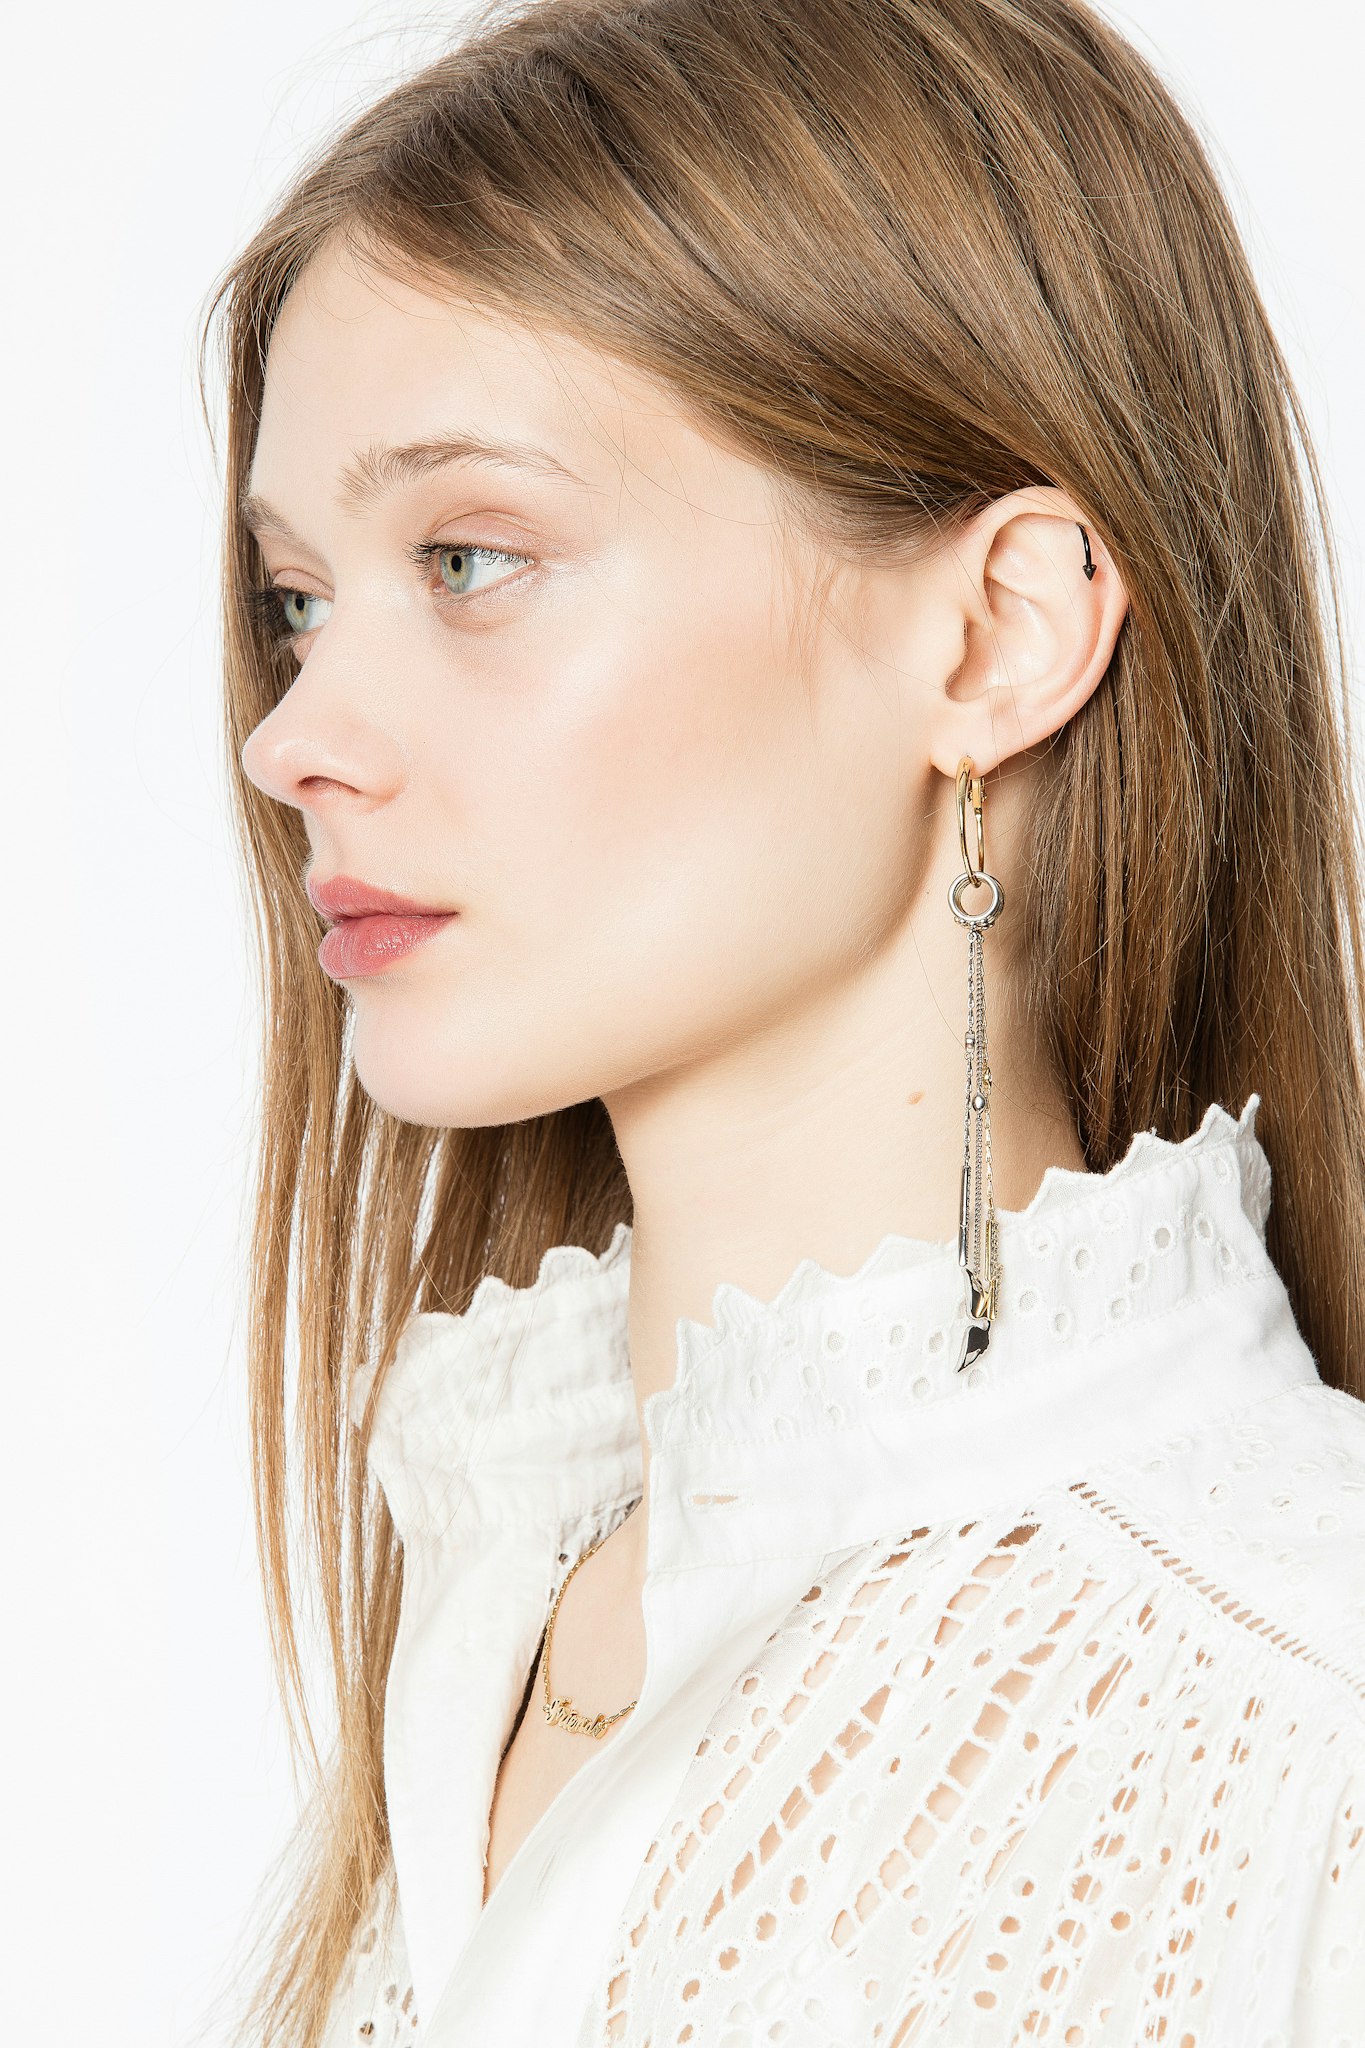 Mila Flash single earring